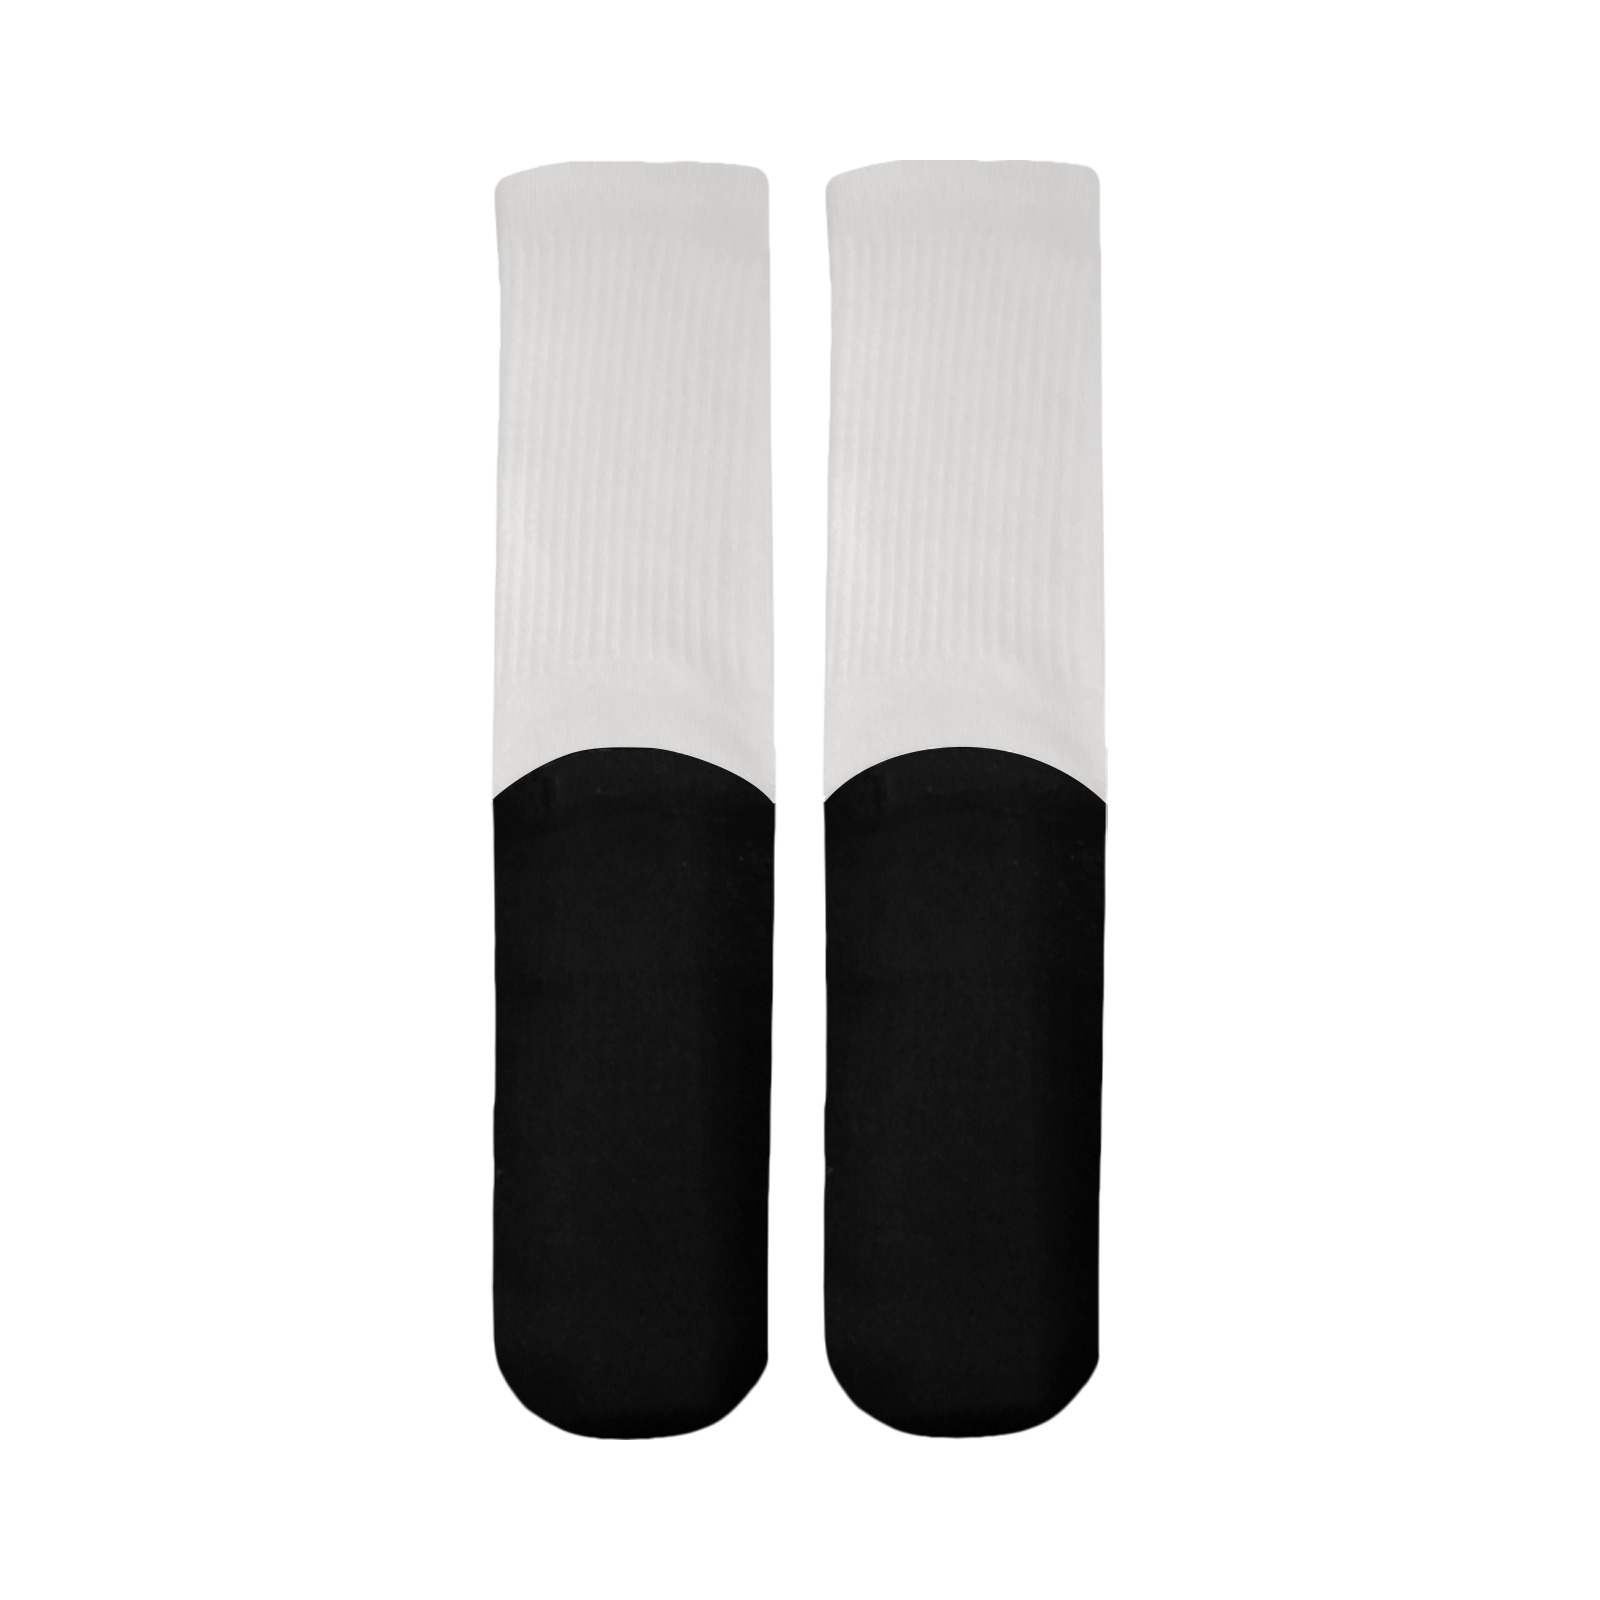 color platinum Mid-Calf Socks (Black Sole)